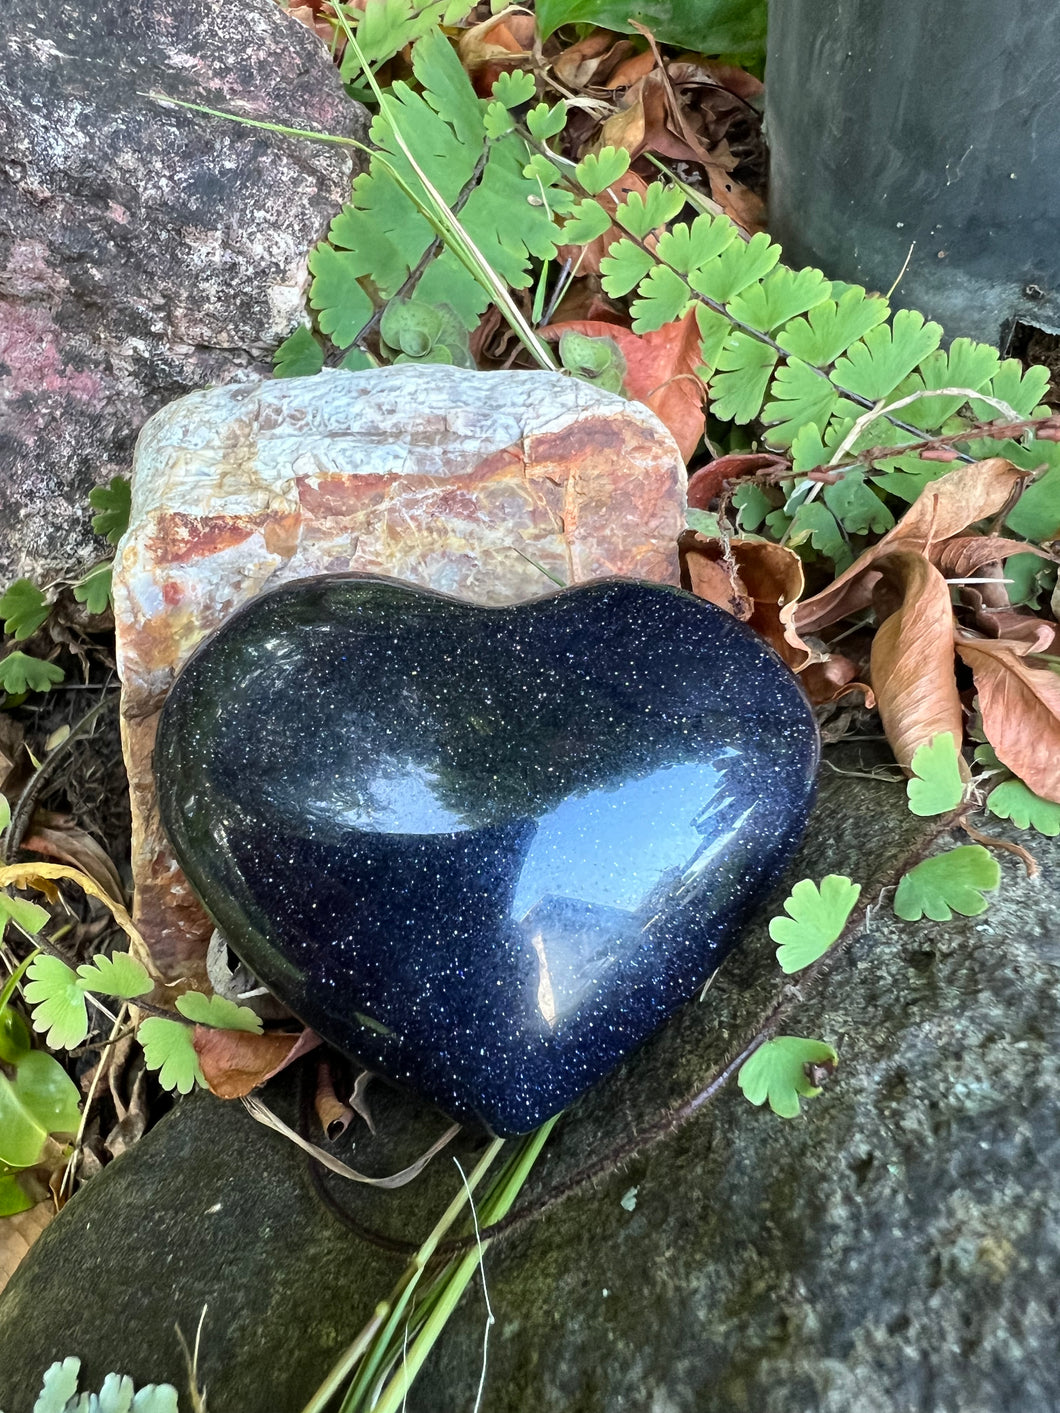 Blue Goldstone Heart